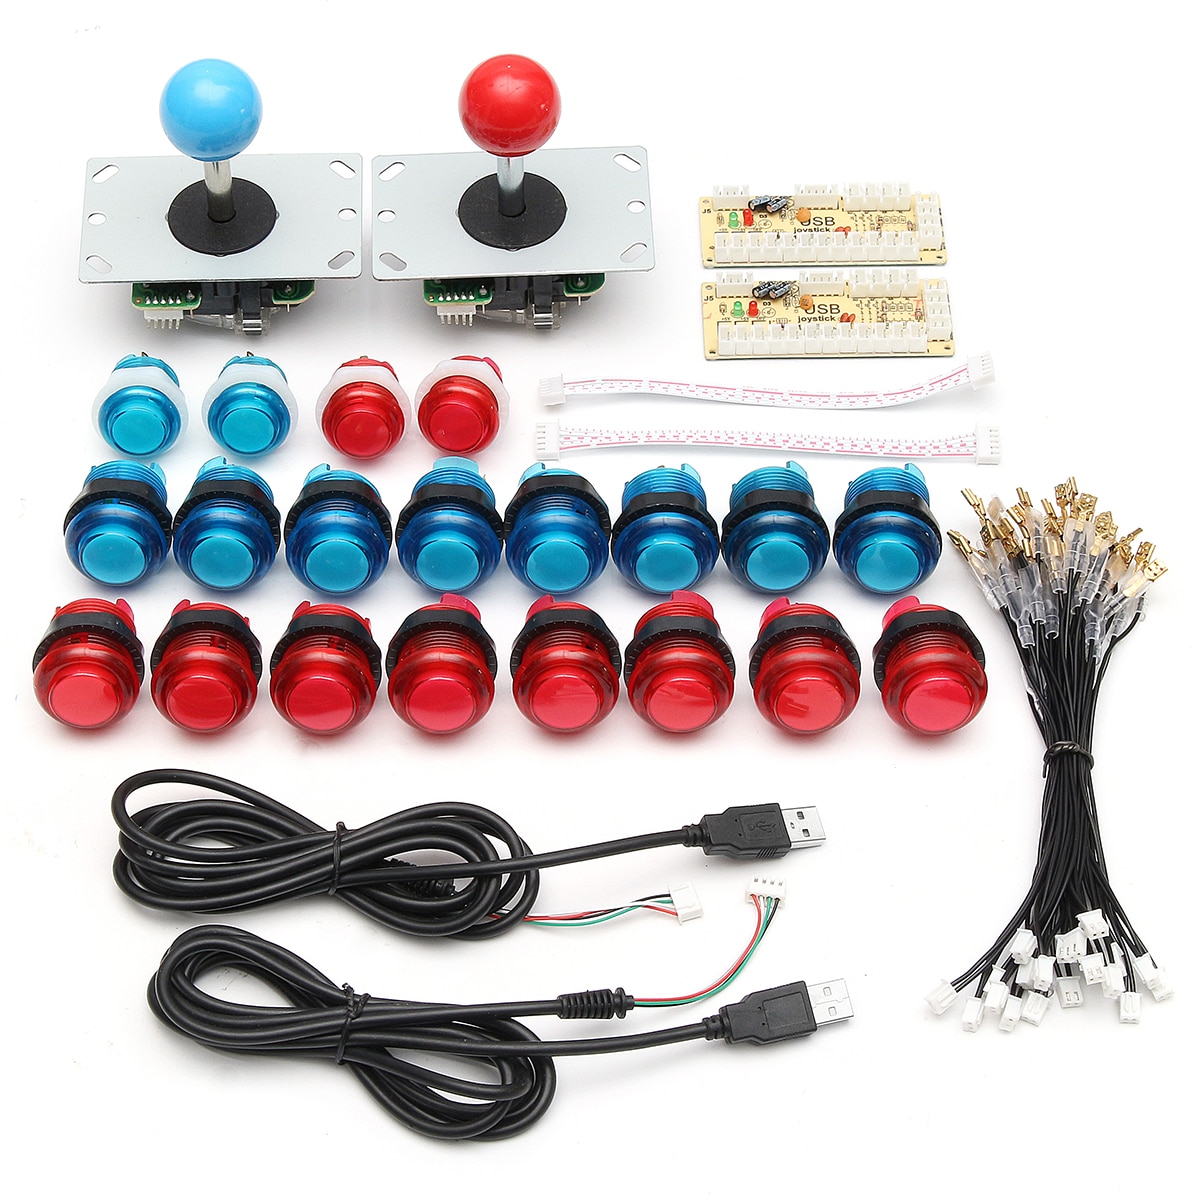 DIY Joystick Arcade Kits 2 Players With 20 LED Arcade Buttons + 2 Joysticks + 2 USB Encoder Kit + Cables Arcade Game Parts Set